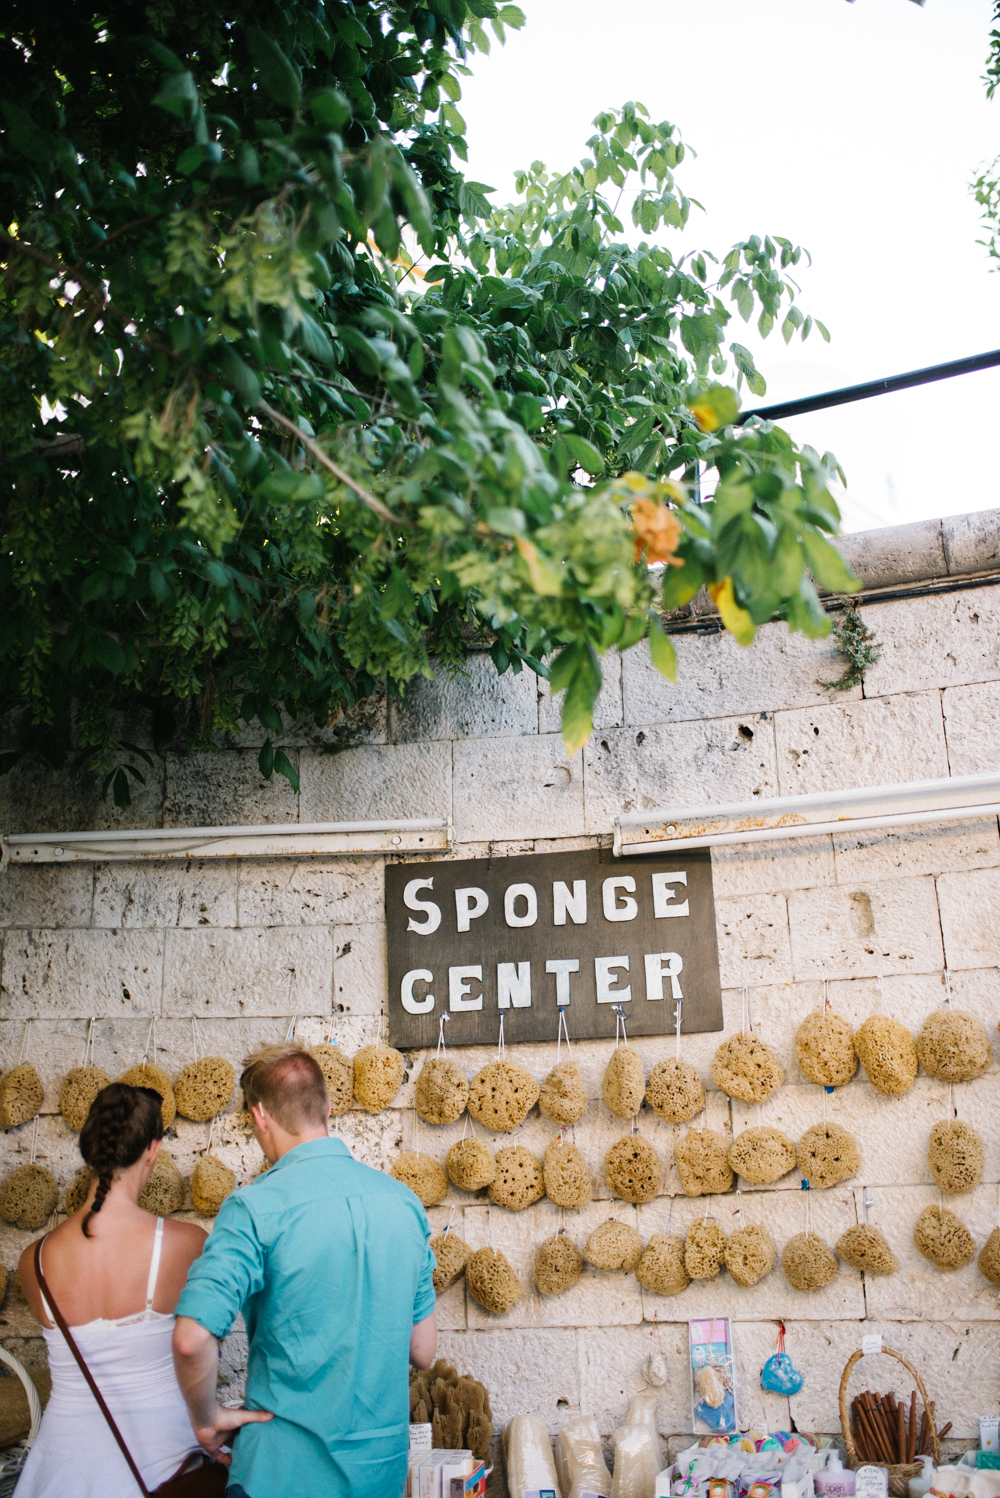 Local Sponge Center on Kos Island